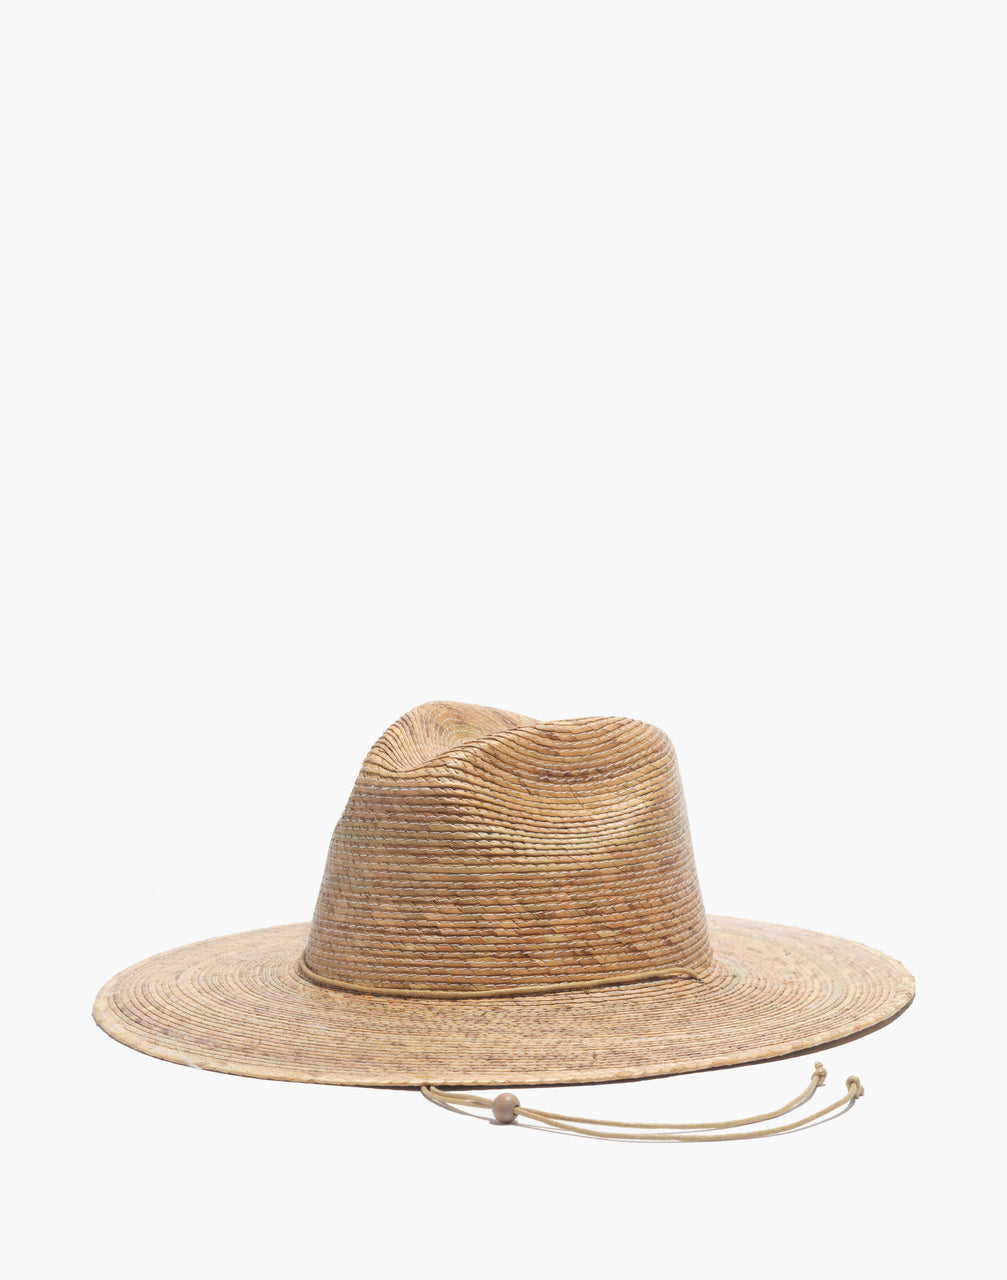 Palm Hat | Natural Brown